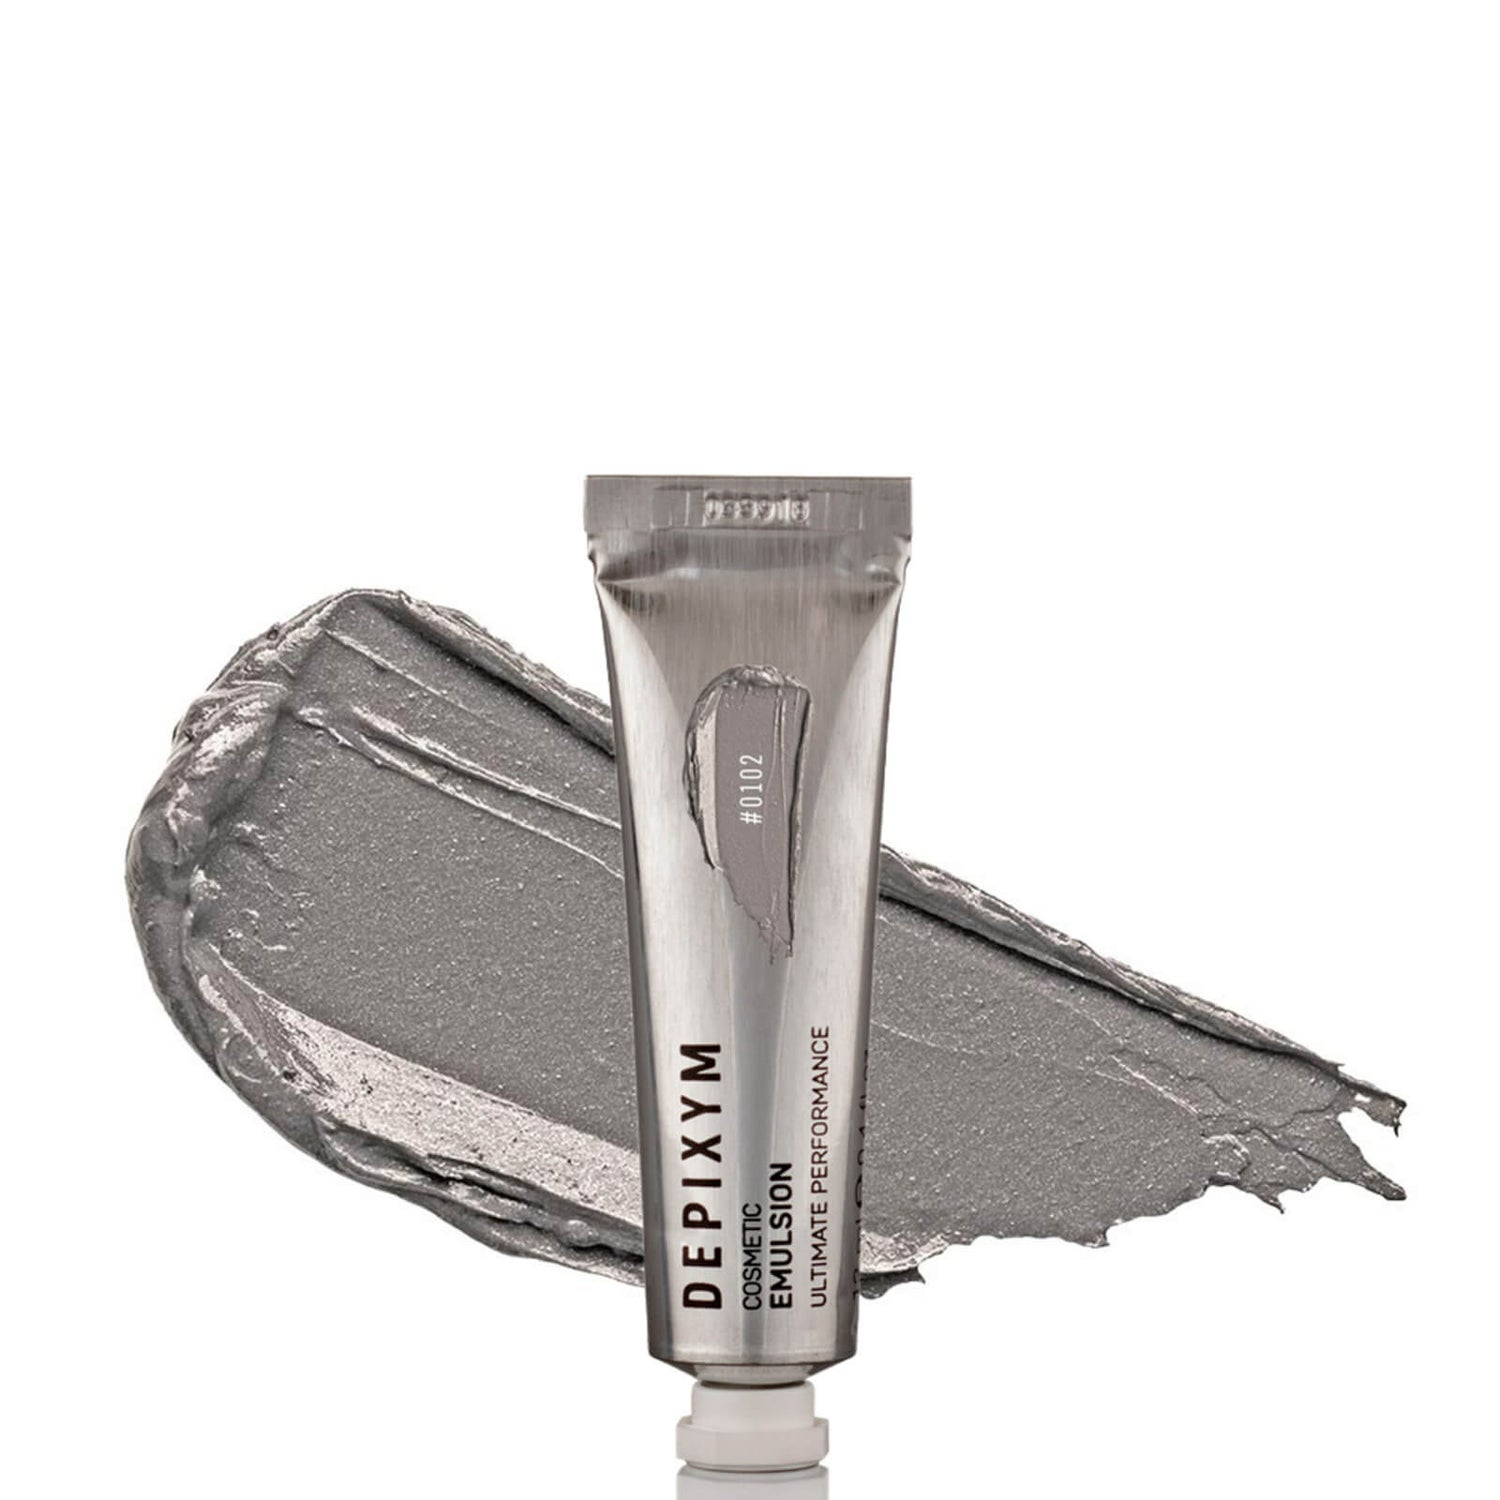 DEPIXYM Cosmetic Emulsion - #0102 Light Grey